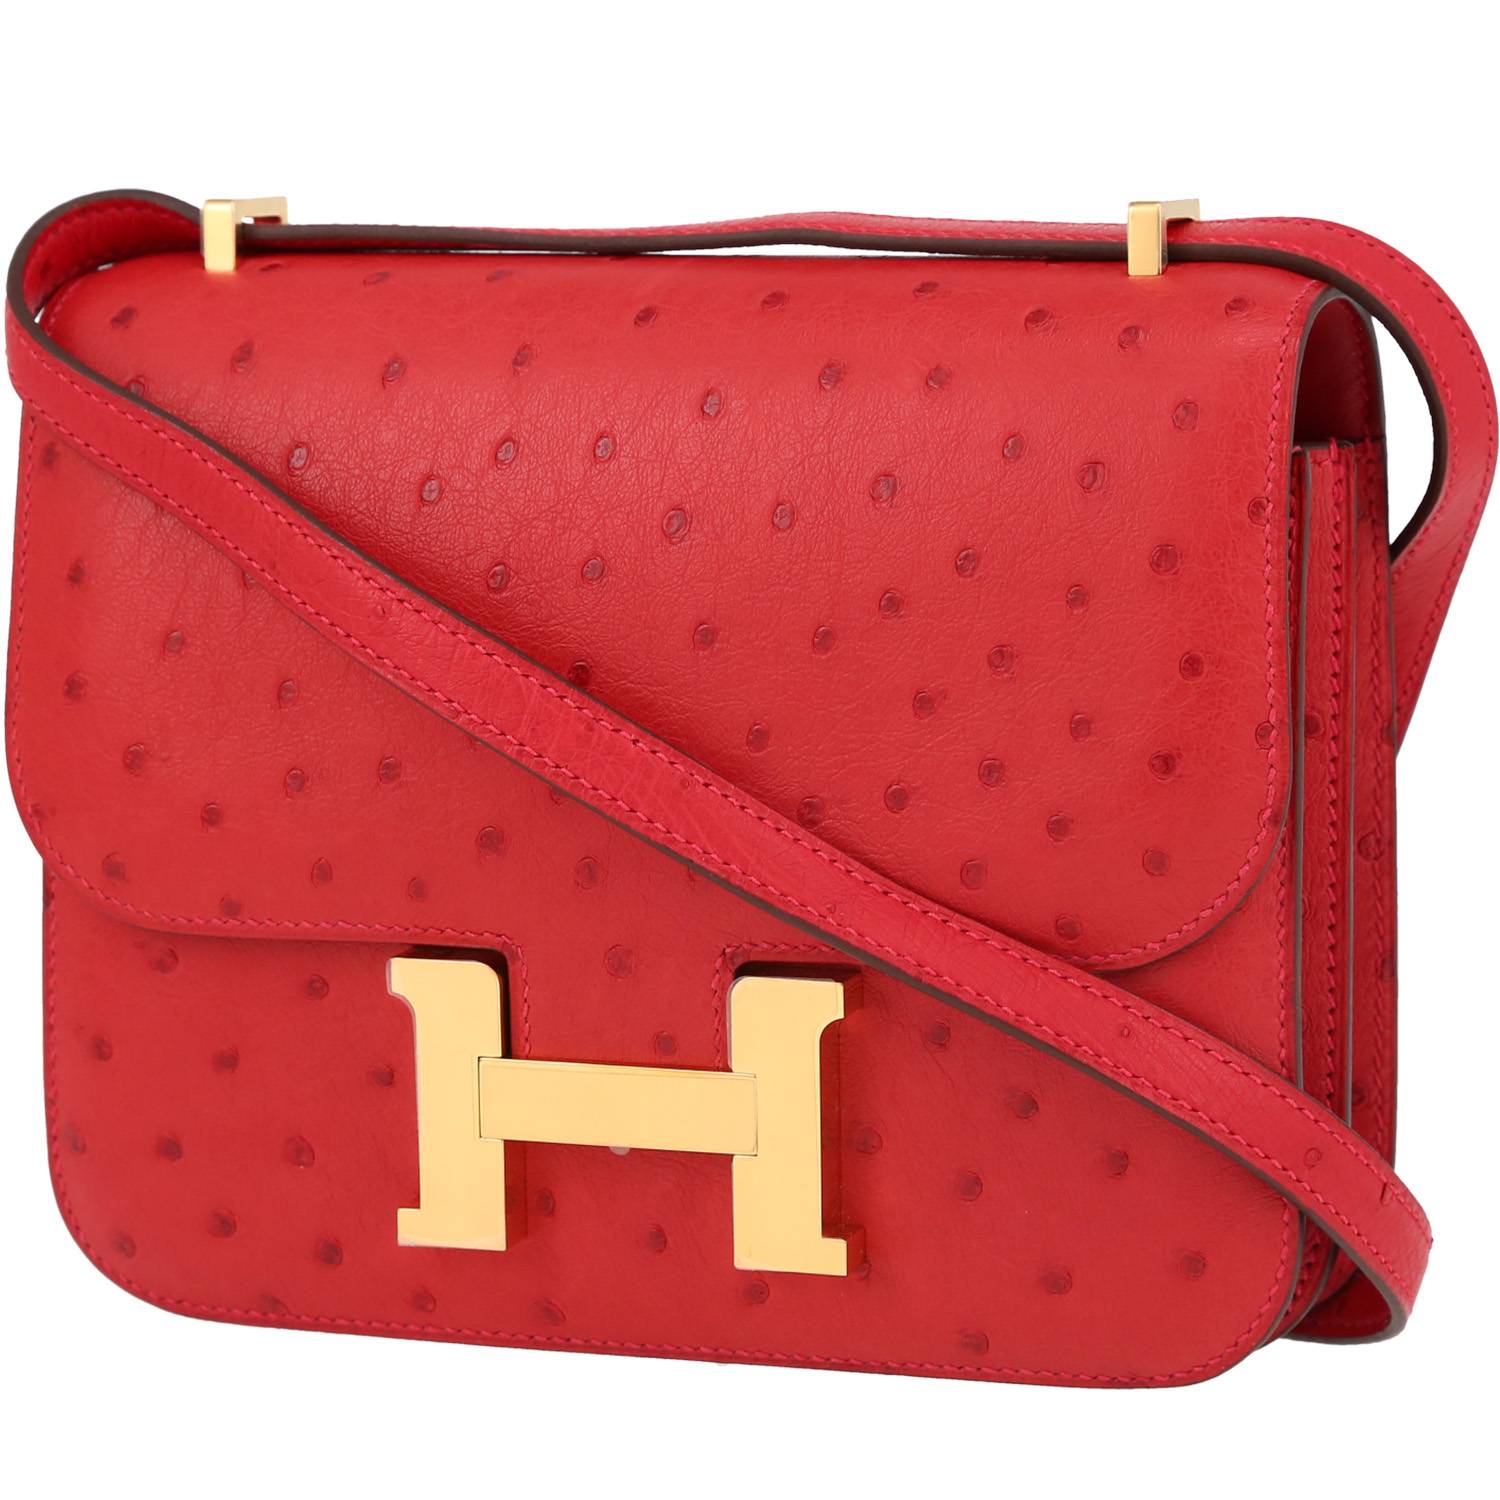 Hermes Constance mini shoulder bag in red Vif ostrich leather